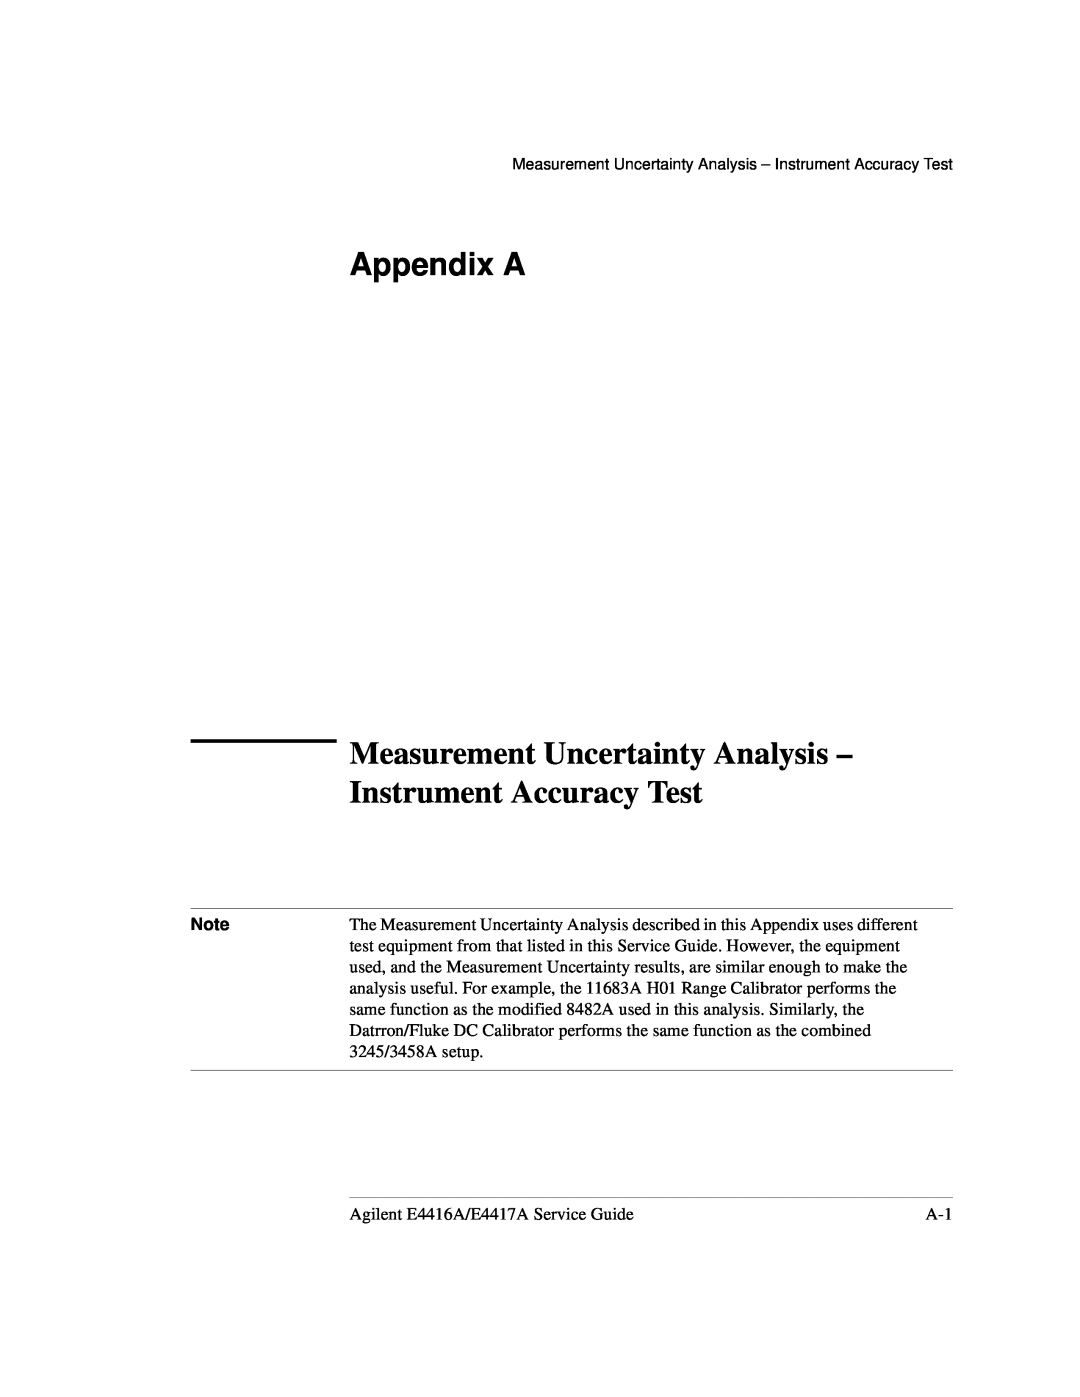 Agilent Technologies e4419b, e4418b manual Appendix A, Measurement Uncertainty Analysis Instrument Accuracy Test 